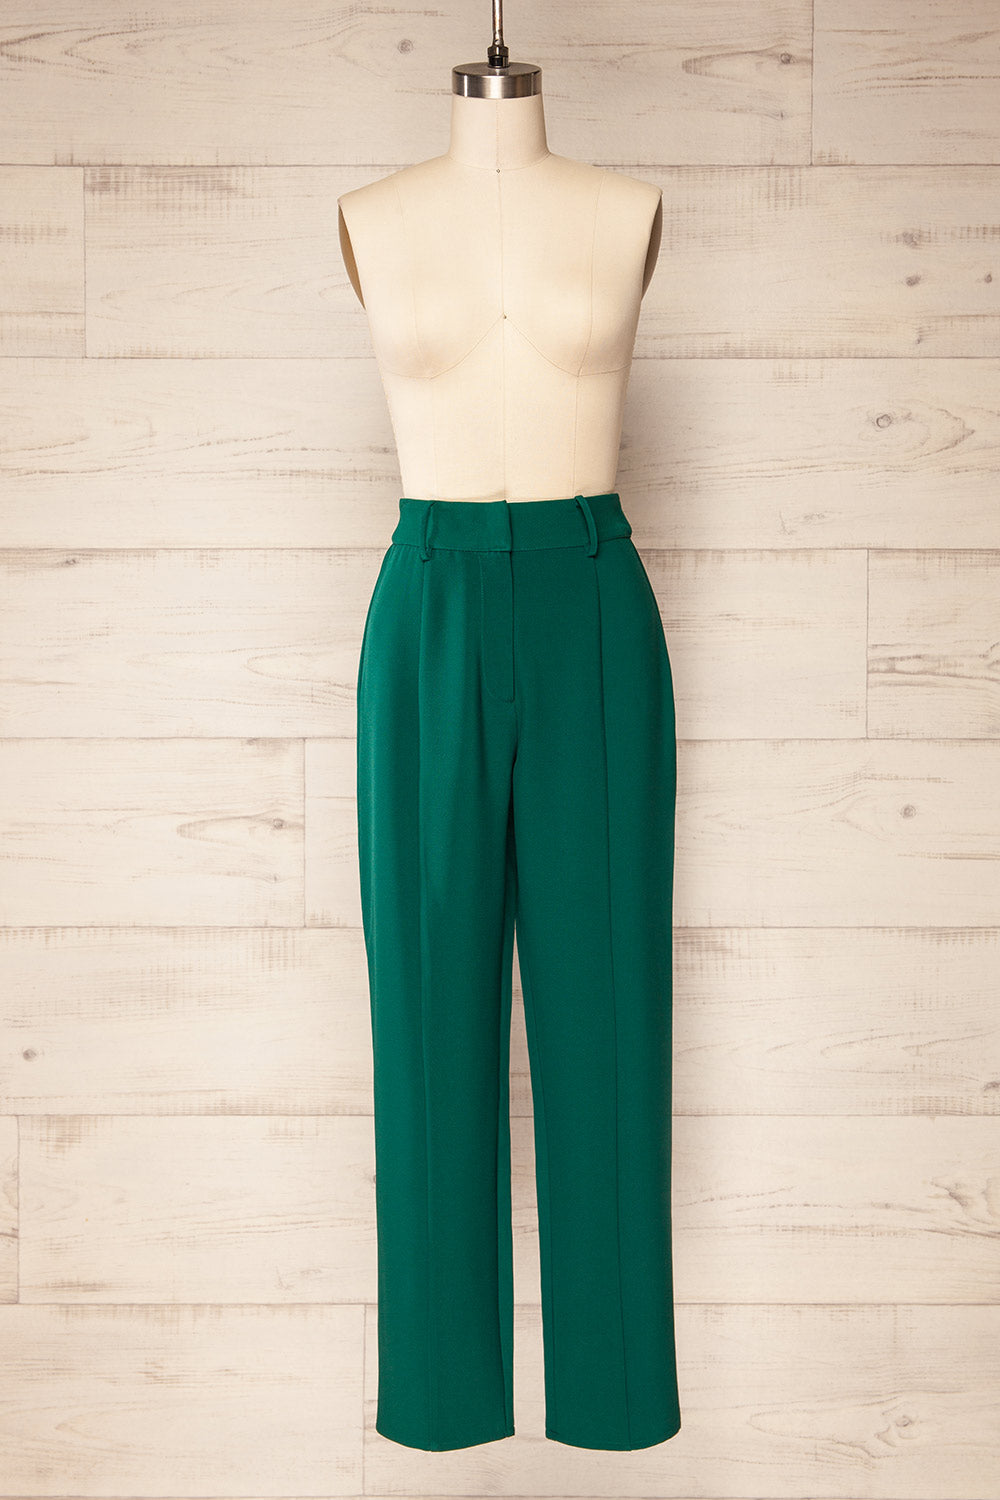 Bergonce High-Waisted Emerald Pants | La petite garçonne front view 